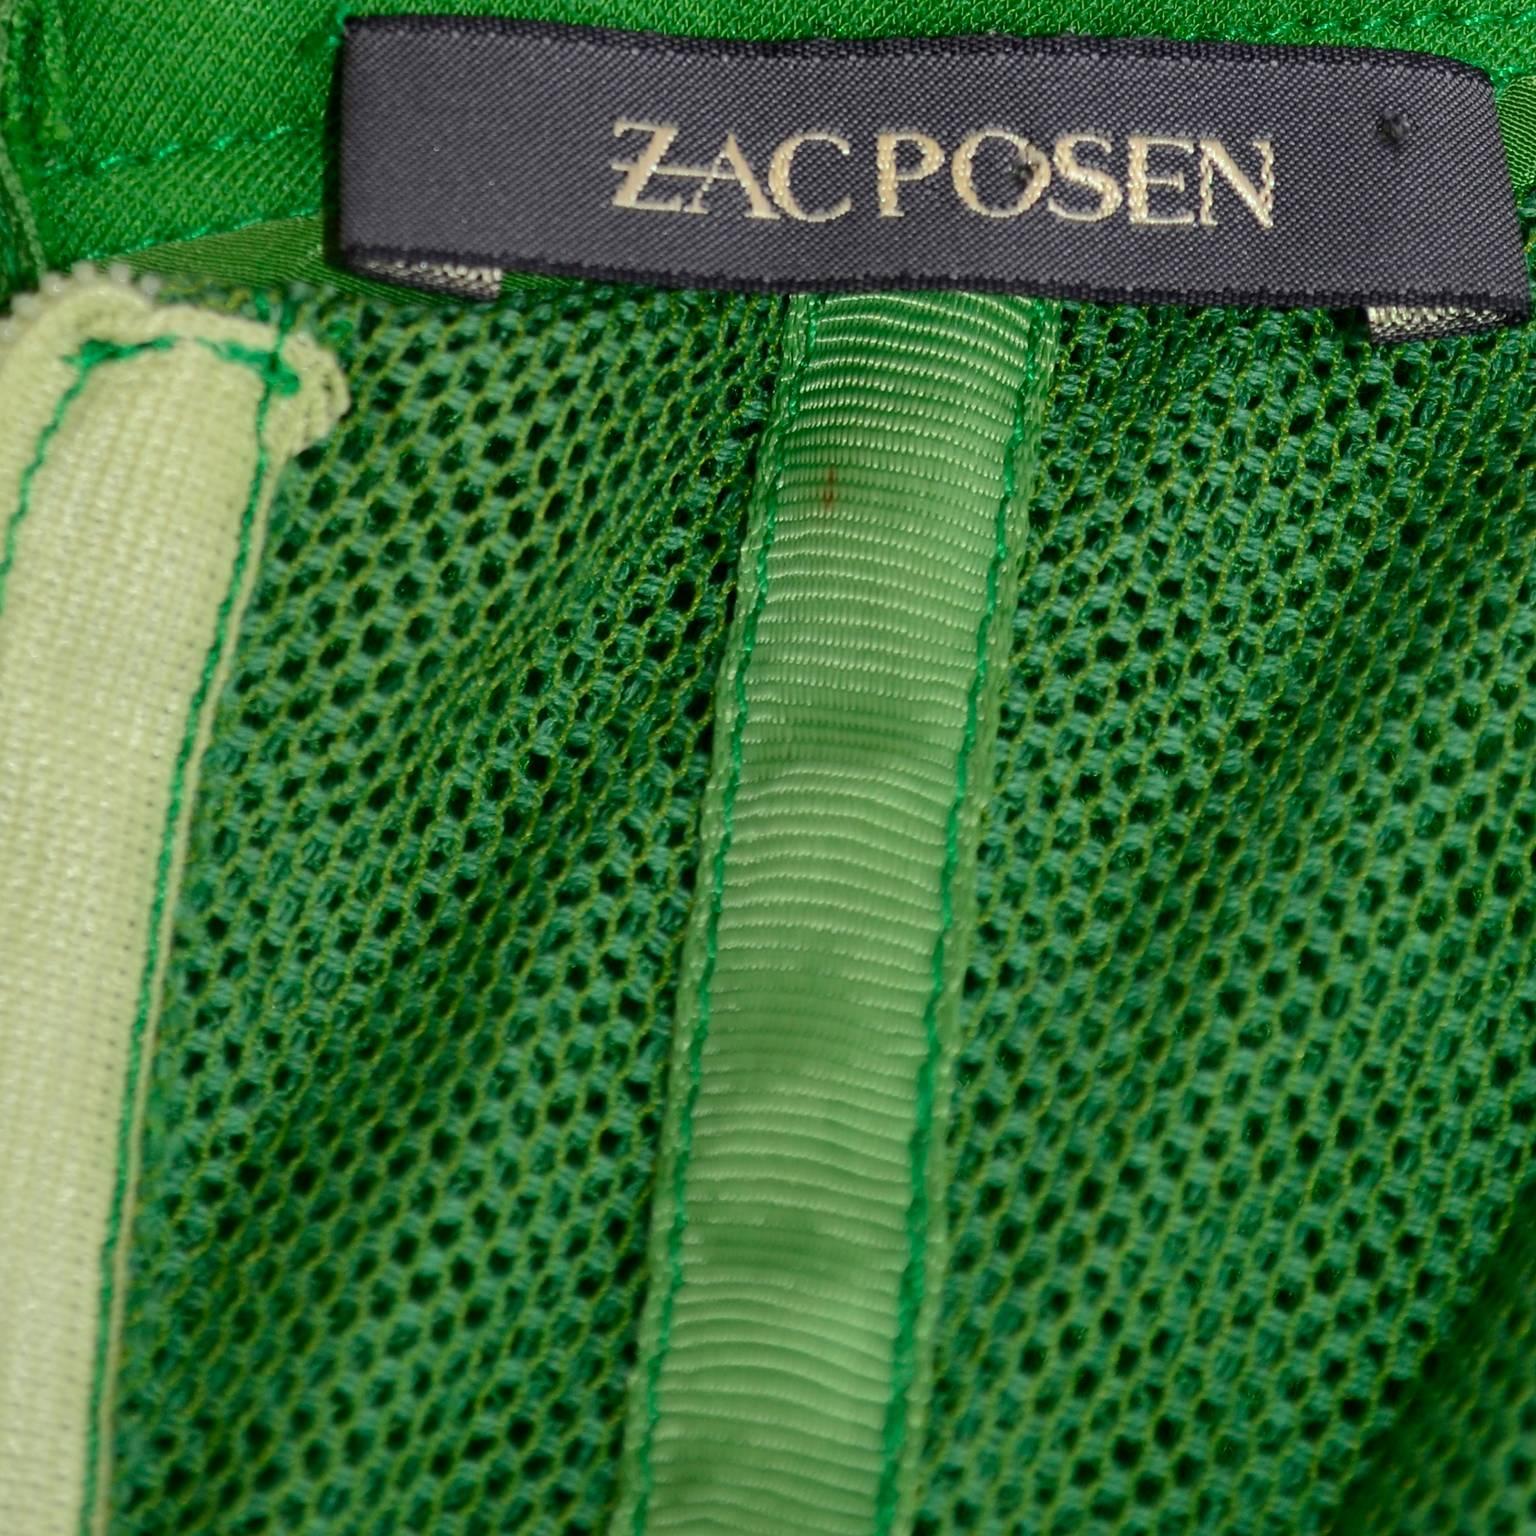 Zac Posen Strapless Dress in Green W Sweetheart Bodice Hourglass Shape & Corset 2